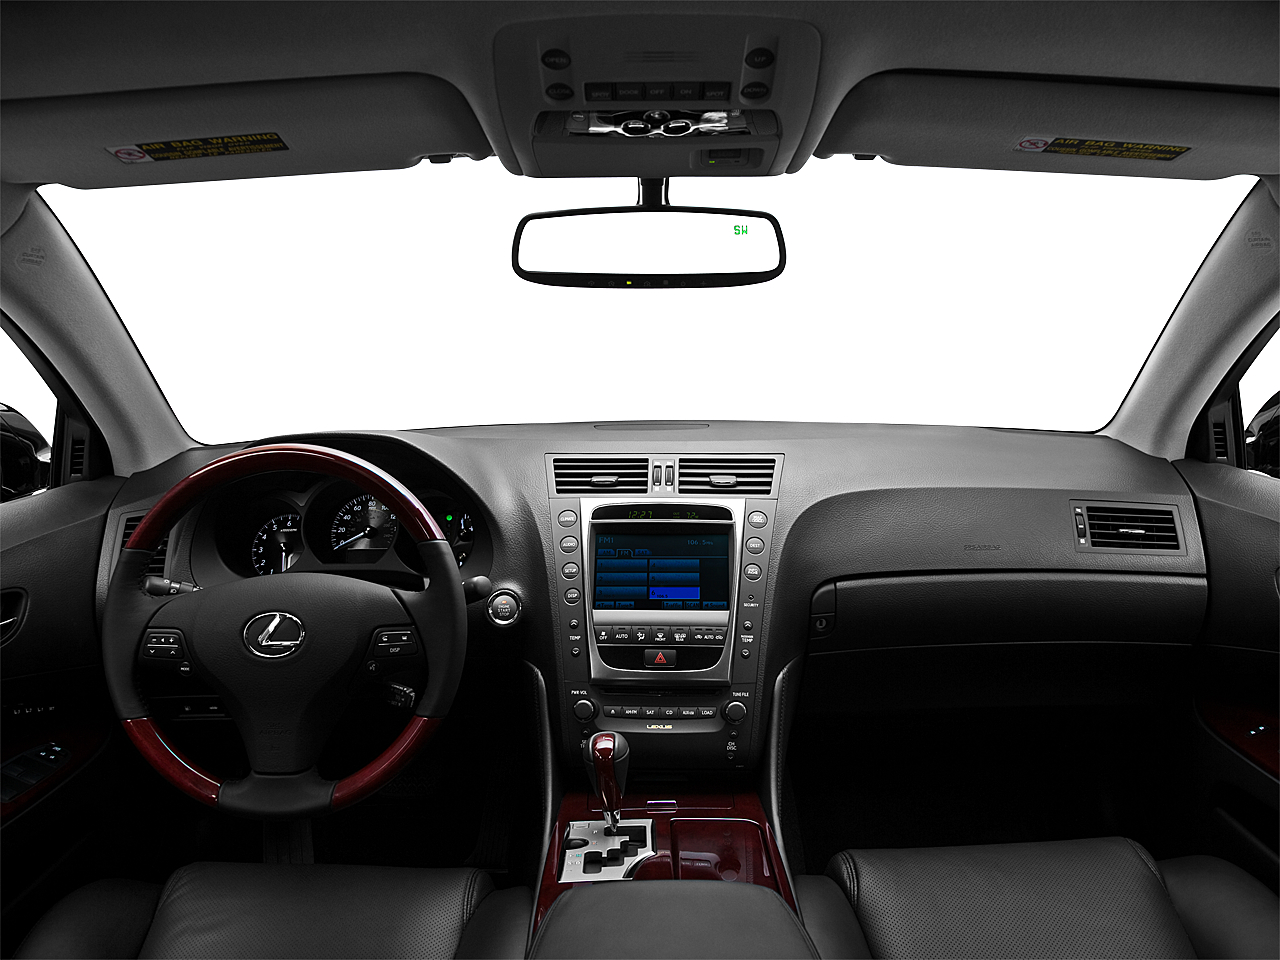 2010 Lexus GS 350 4dr Sedan - Research - GrooveCar